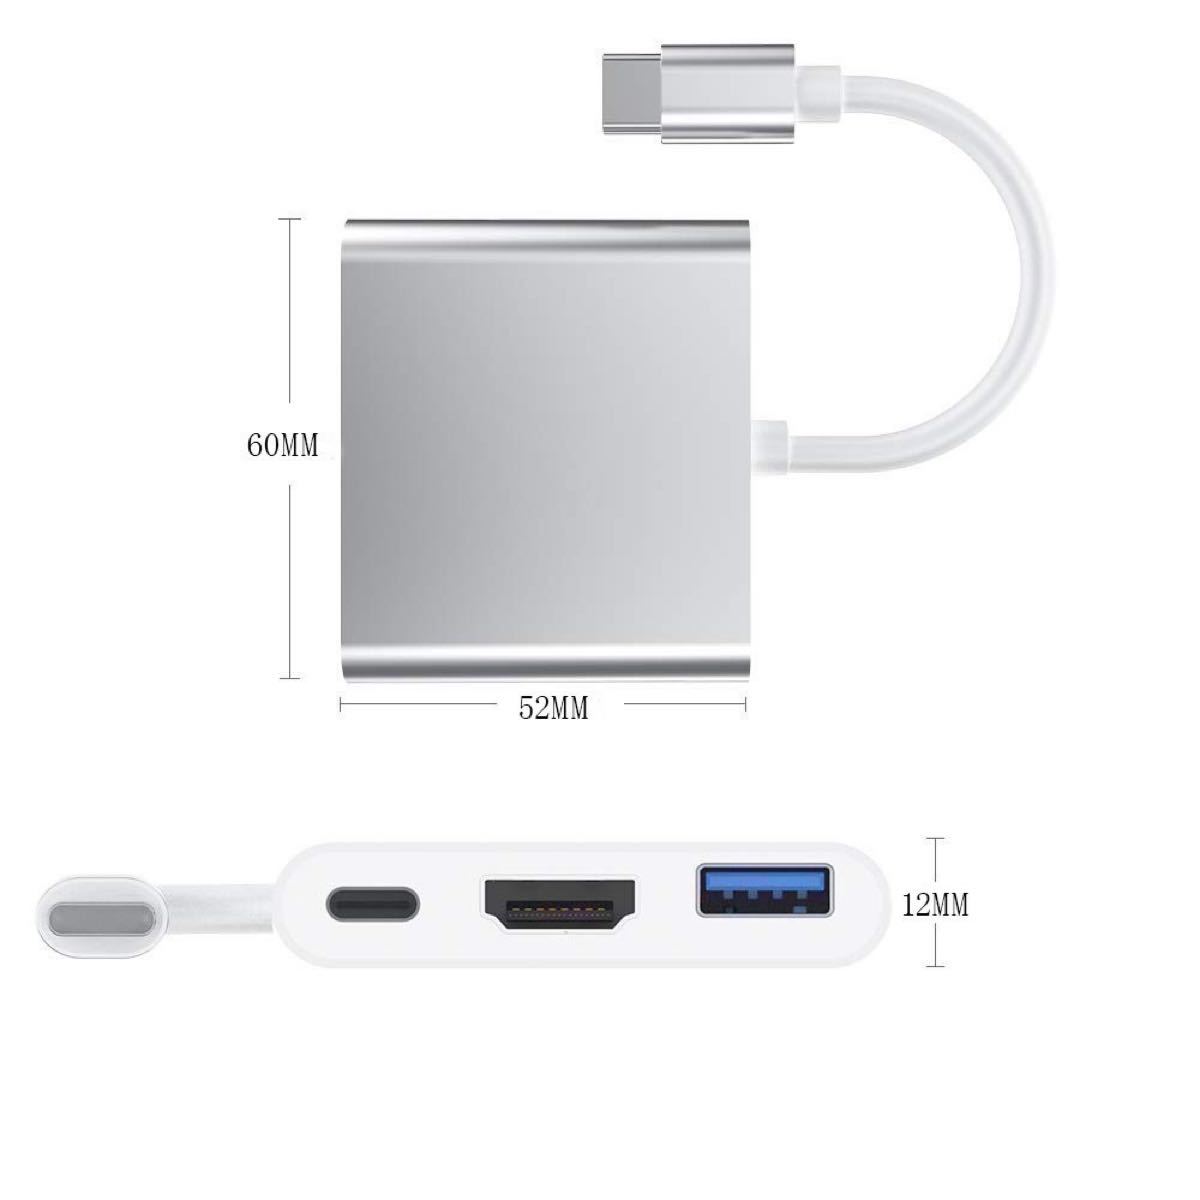 Type-C 変換アダプタ USBハブ HDMI 4K USB シルバー